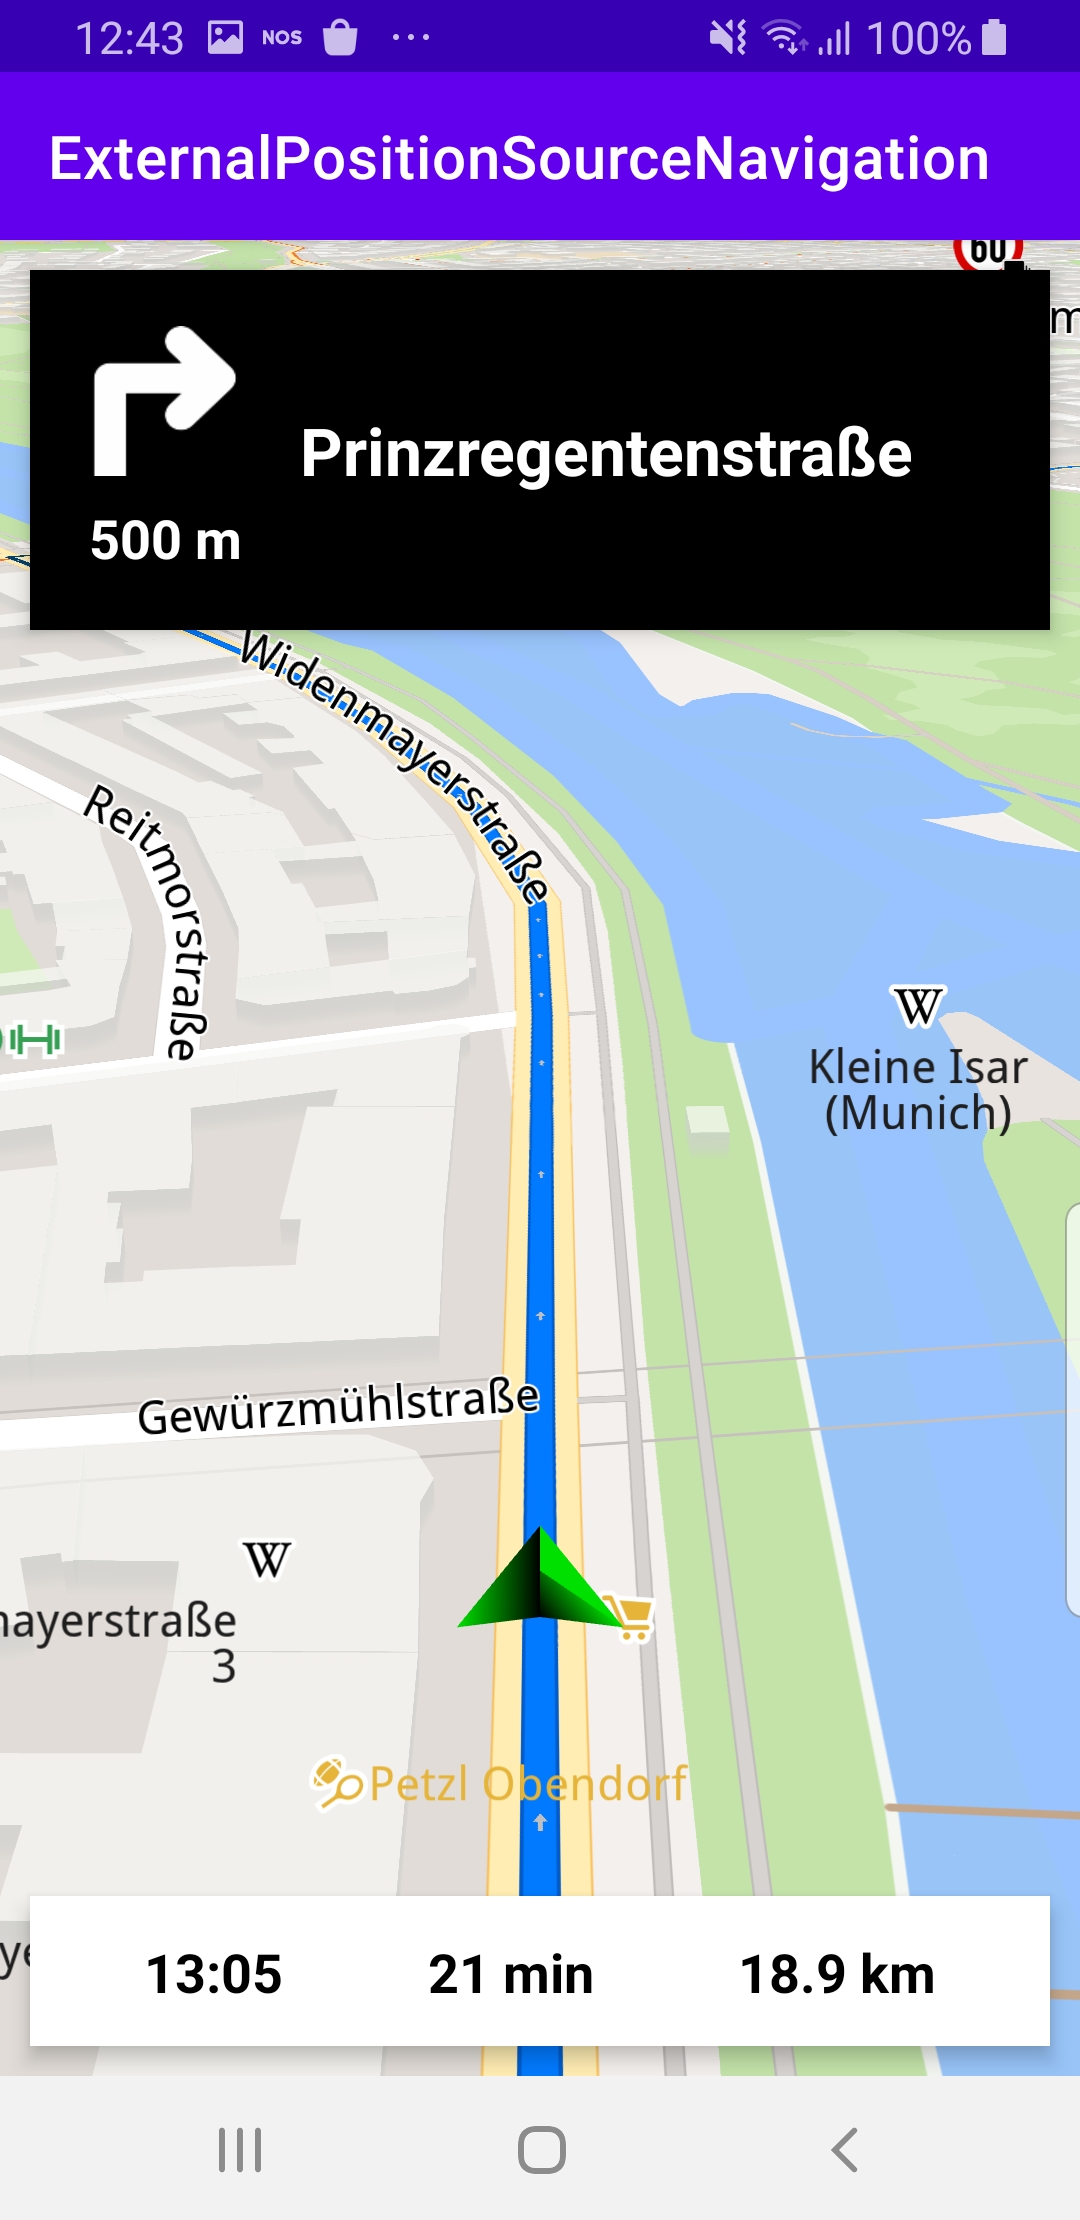 External position source navigation example Android screenshot